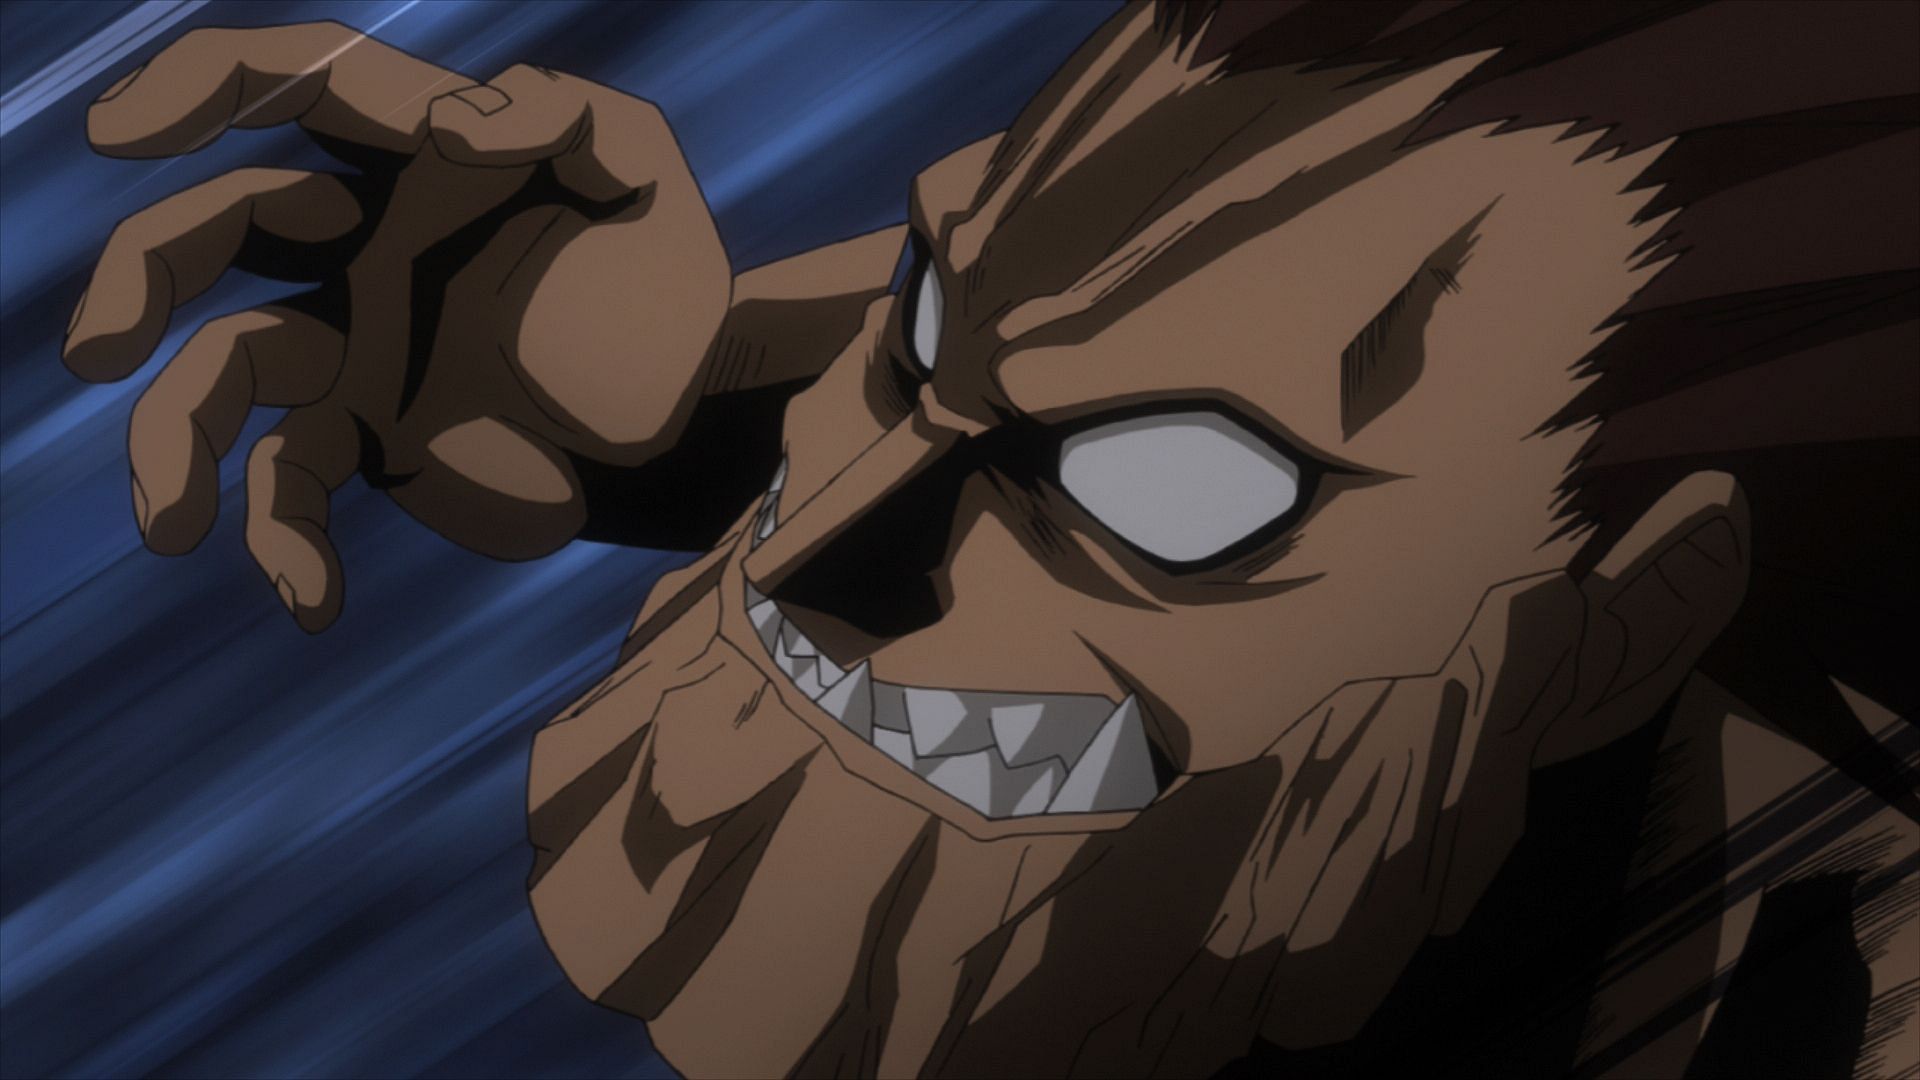 Gigantomachia, as seen in the anime My Hero Academia (Image via Bones)